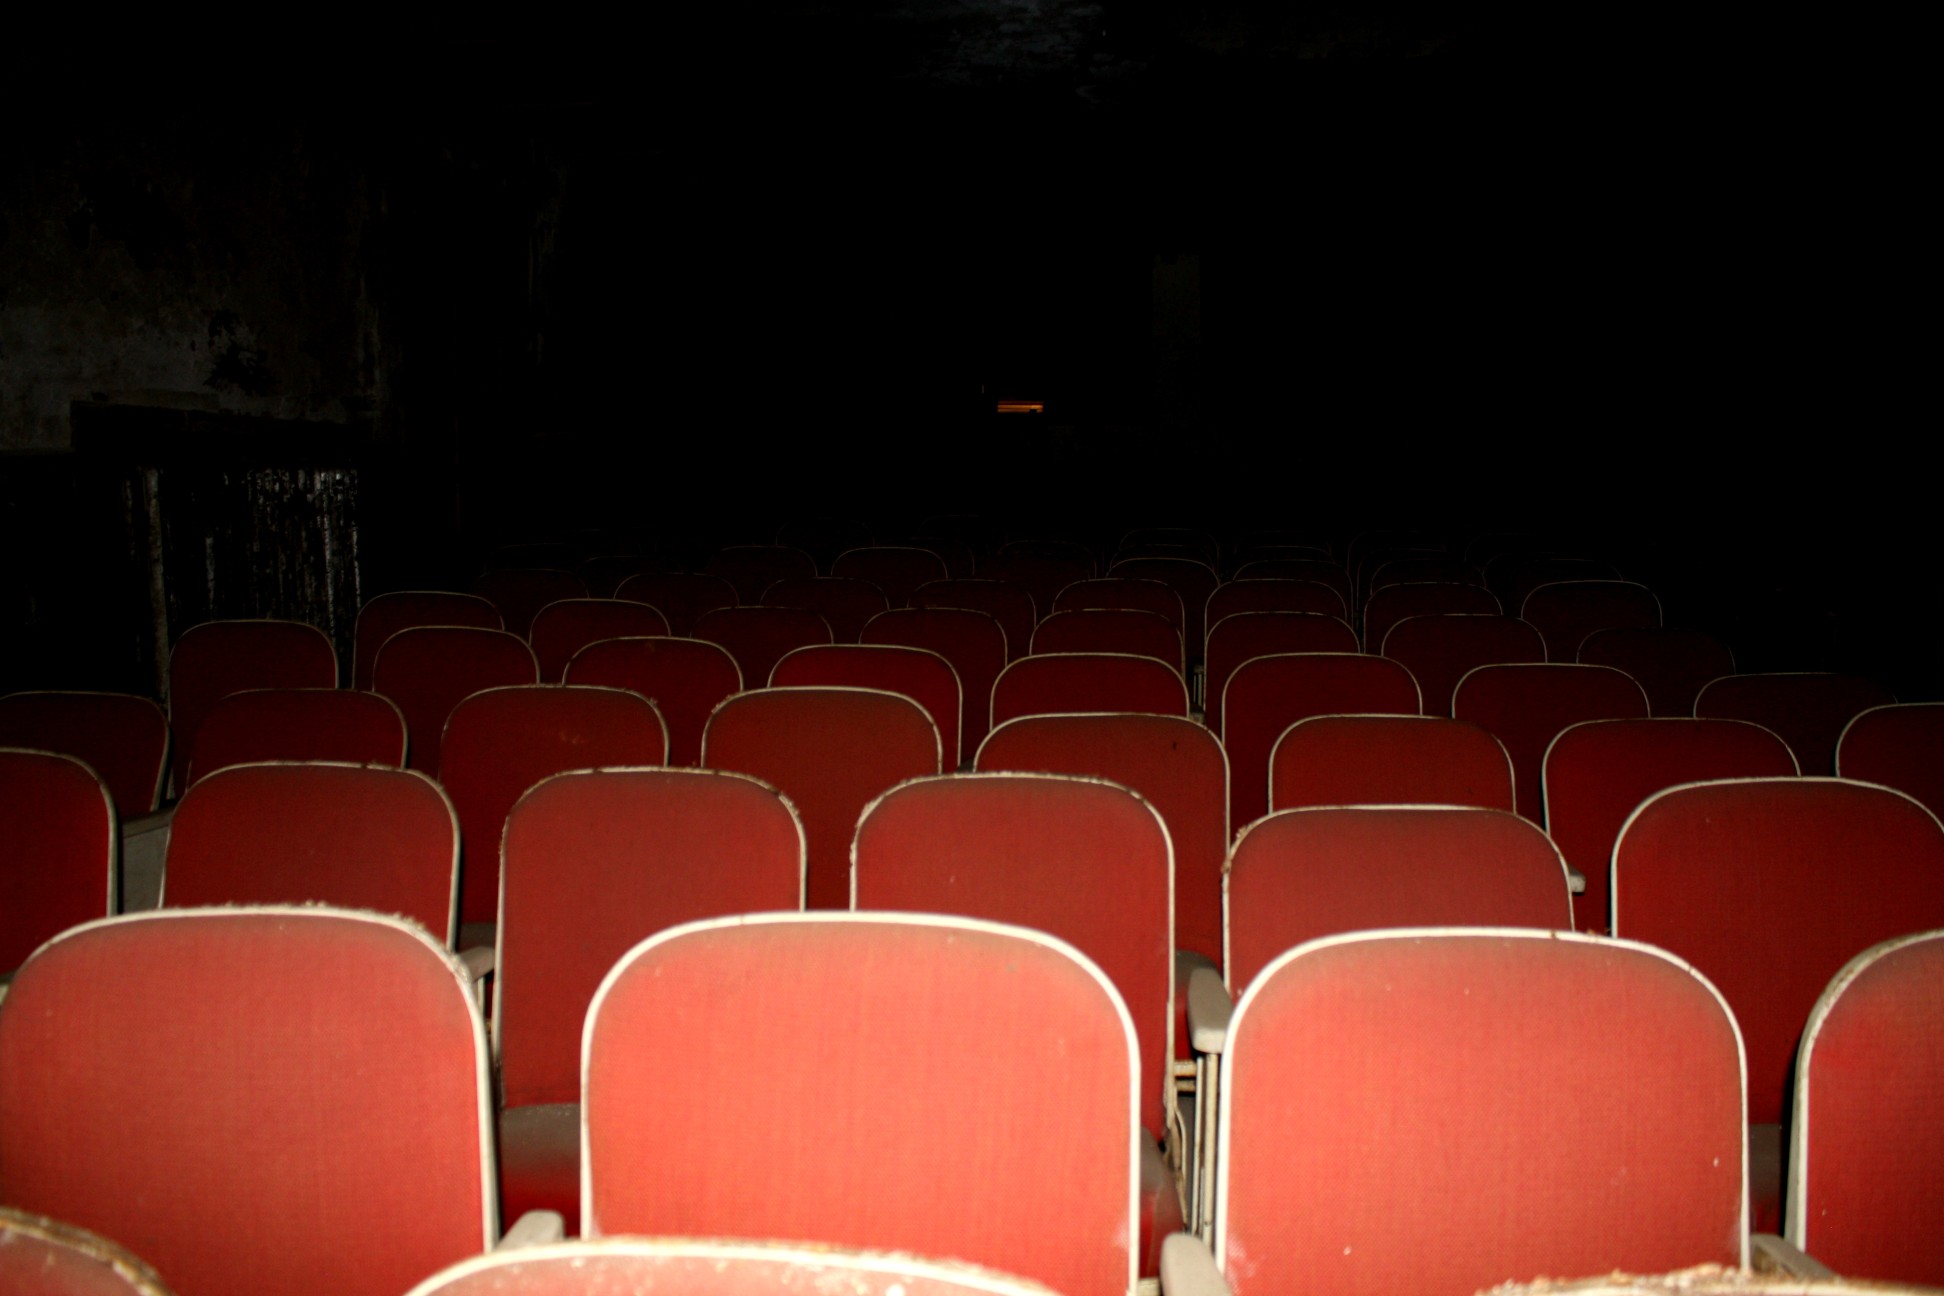 Saenger Theater